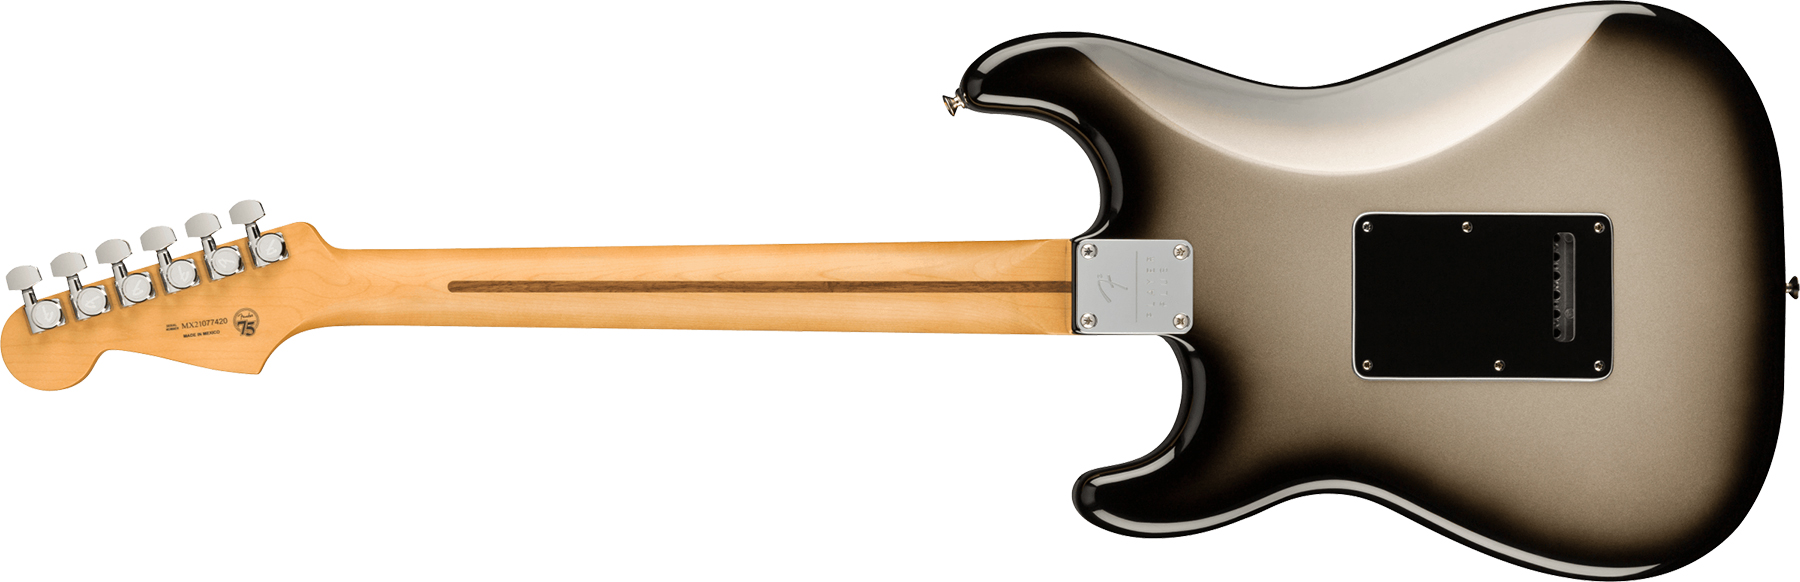 Fender Strat Player Plus Mex Hss Trem Pf - Silverburst - Guitarra eléctrica con forma de str. - Variation 1